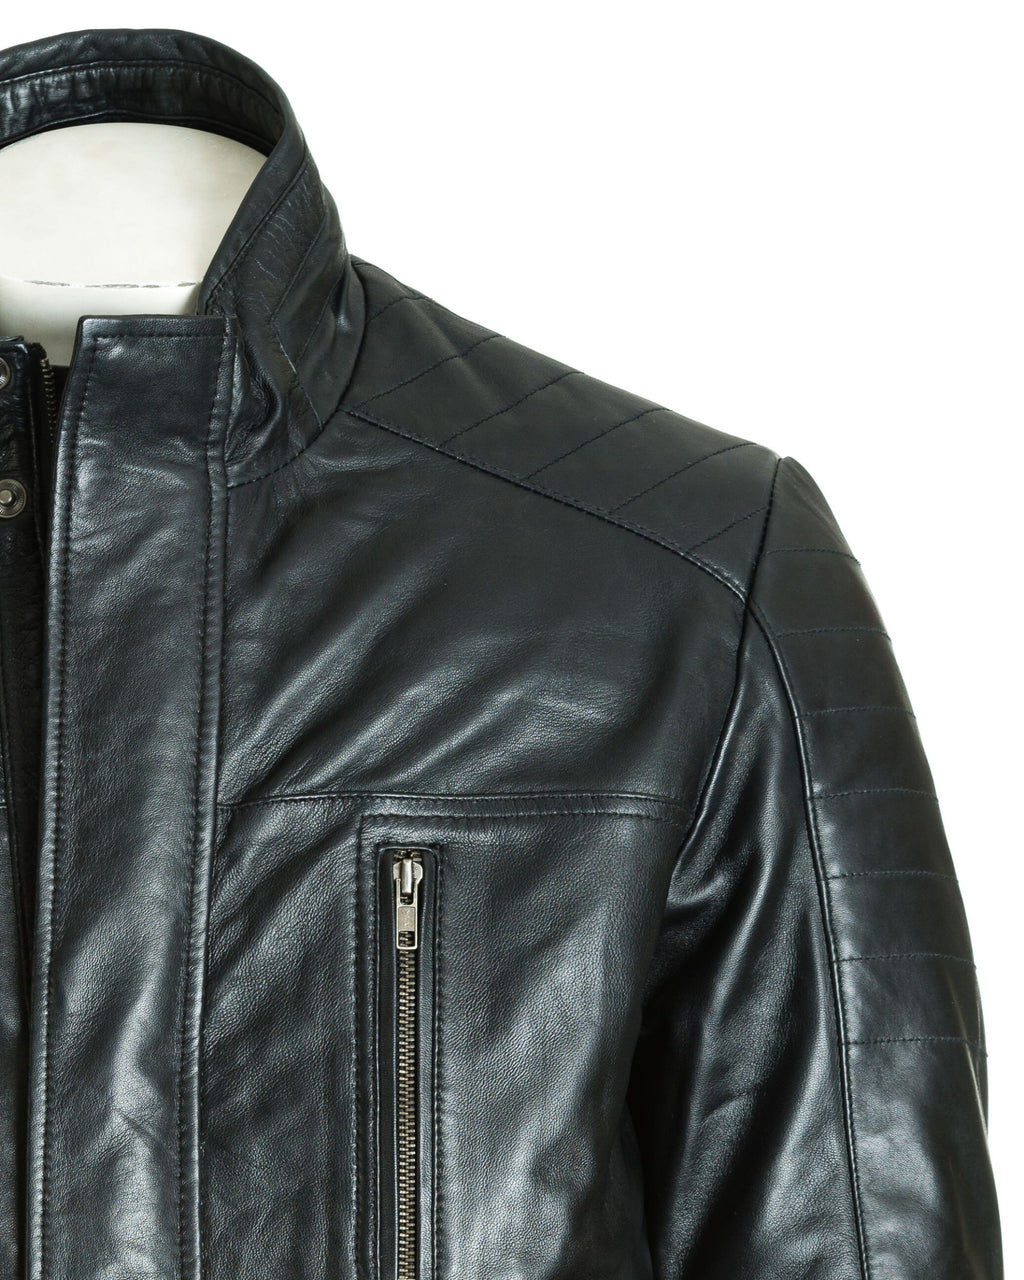 Men's Dark Brown Leather Coat With Shoulder Panel Stitch Detail: Enrico